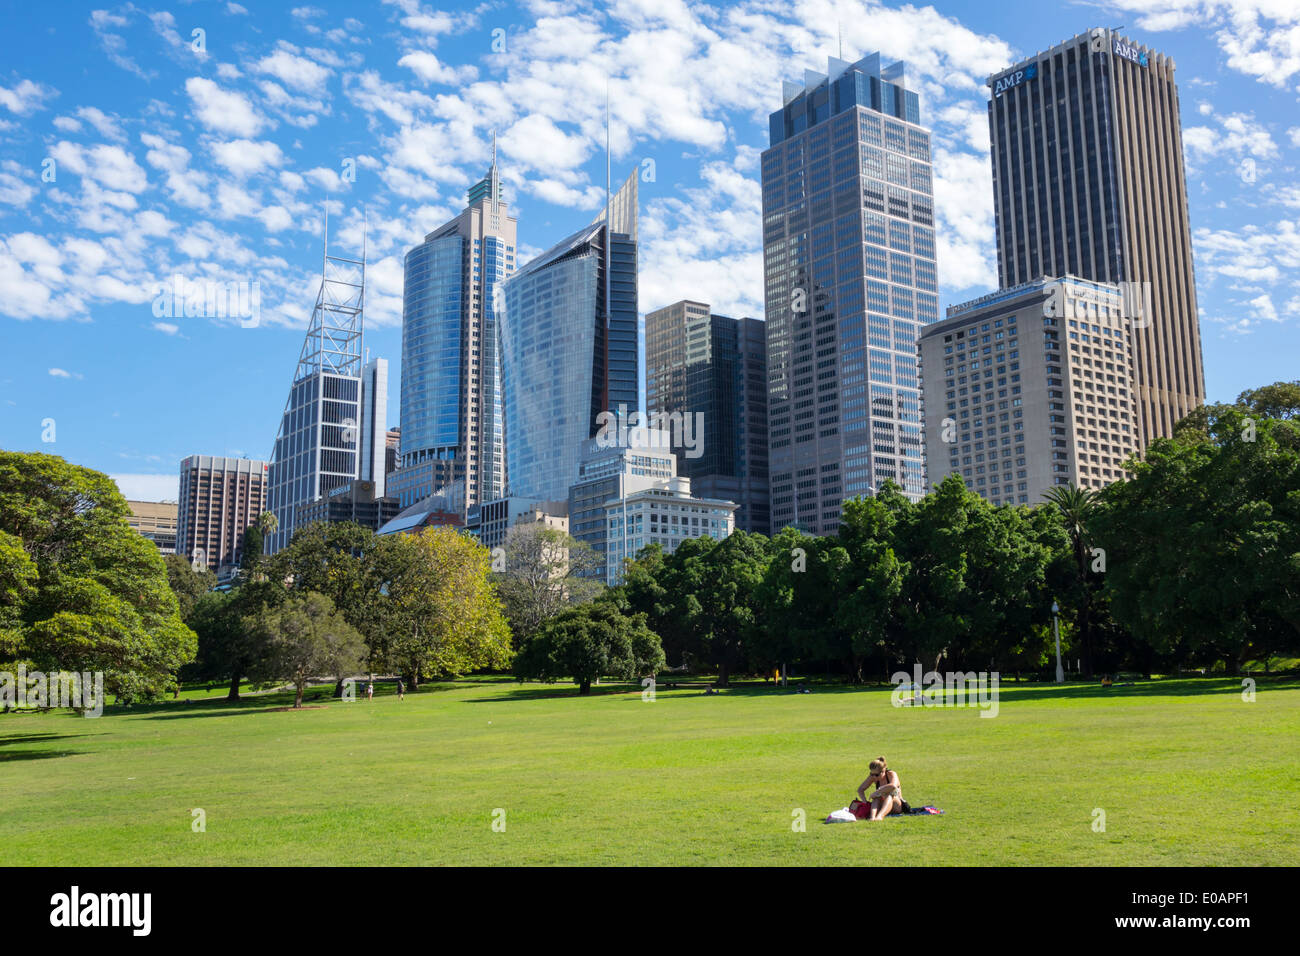 Sydney Australia,Royal Botanic Gardens,city skyline,skyscrapers,woman female women,lawn,park,AU140309117 Stock Photo